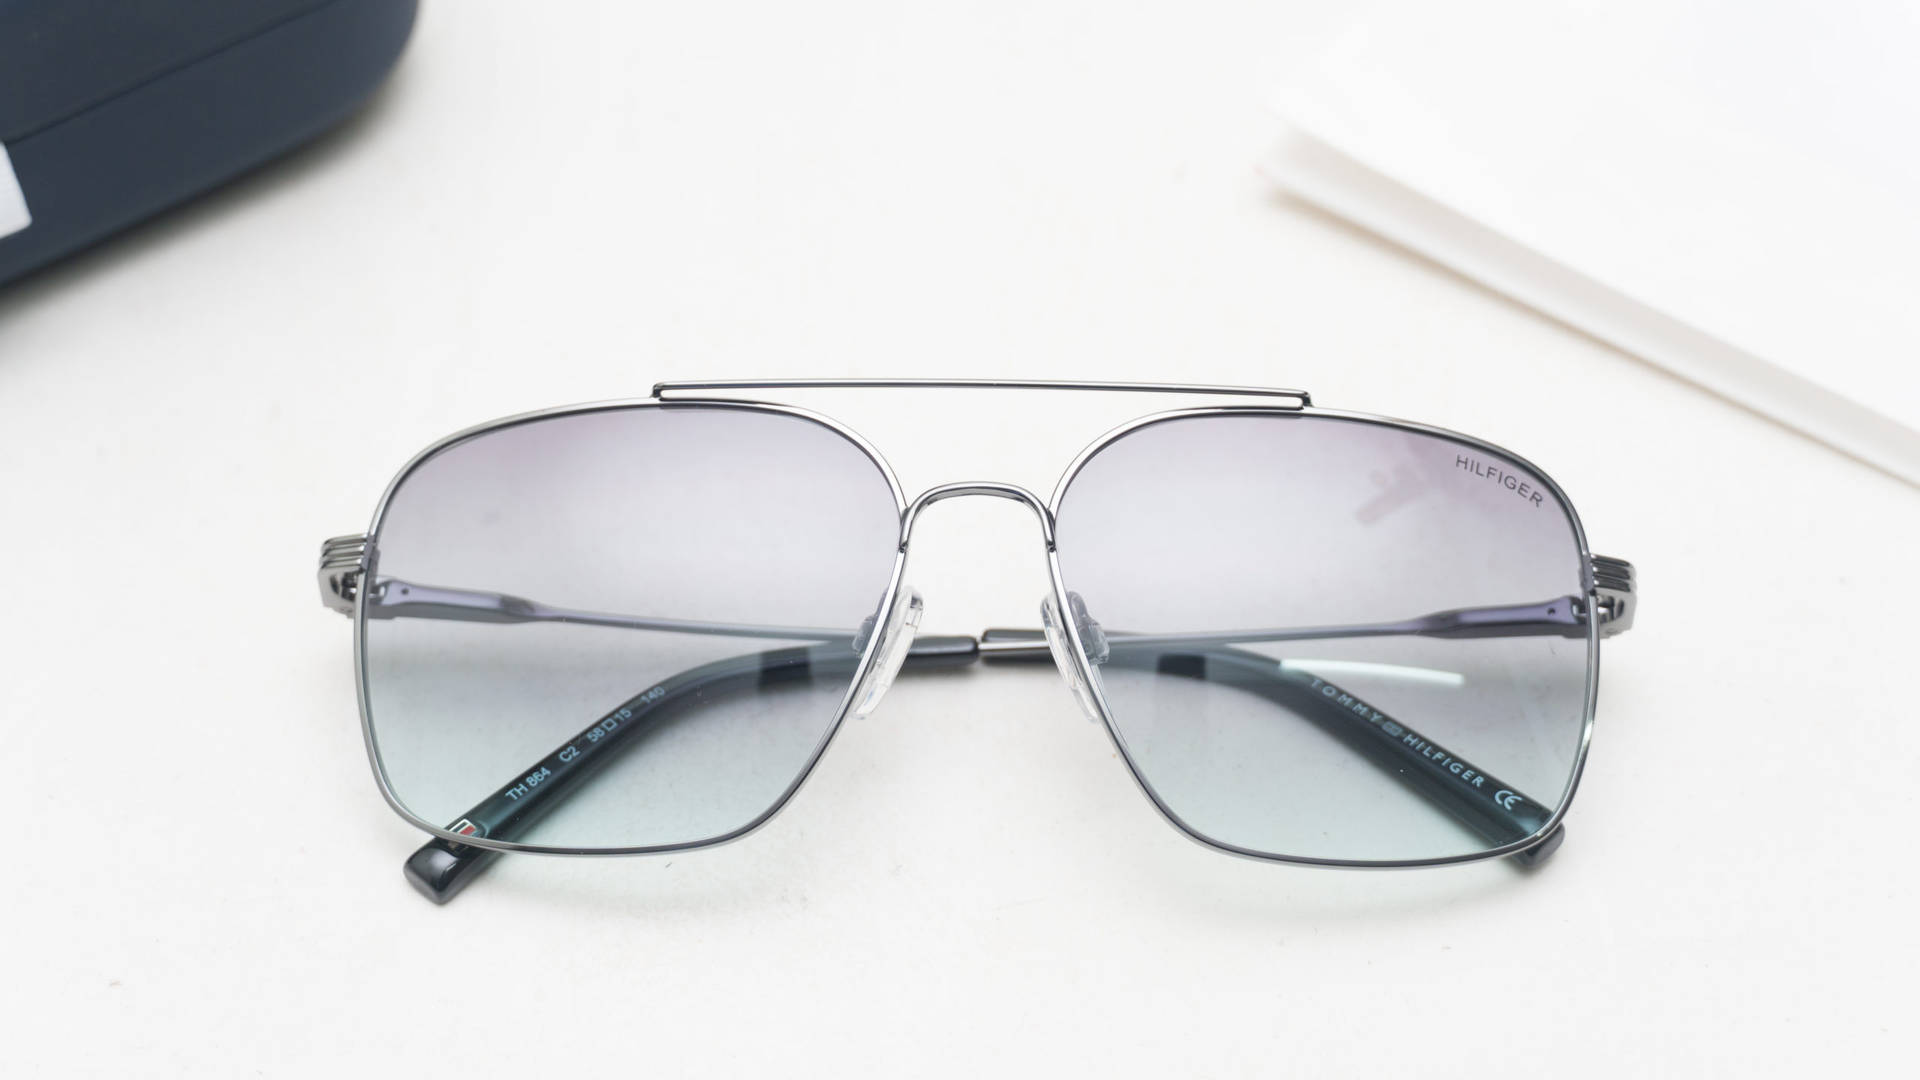 Chic Tommy Hilfiger Blue-Lens Rectangular Glasses Wallpaper